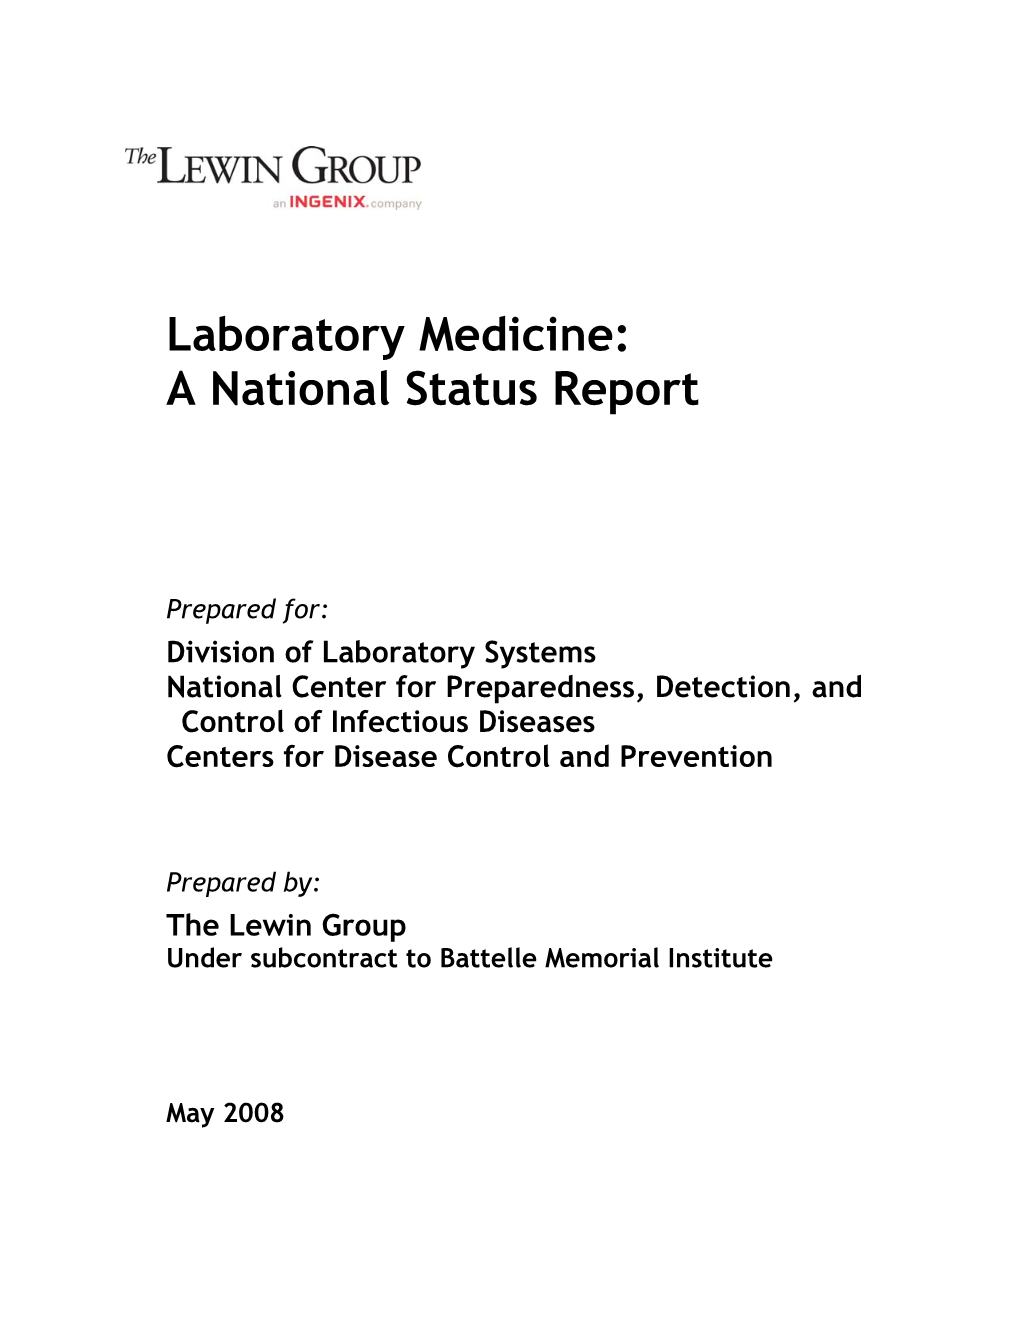 Laboratory Medicine: a National Status Report